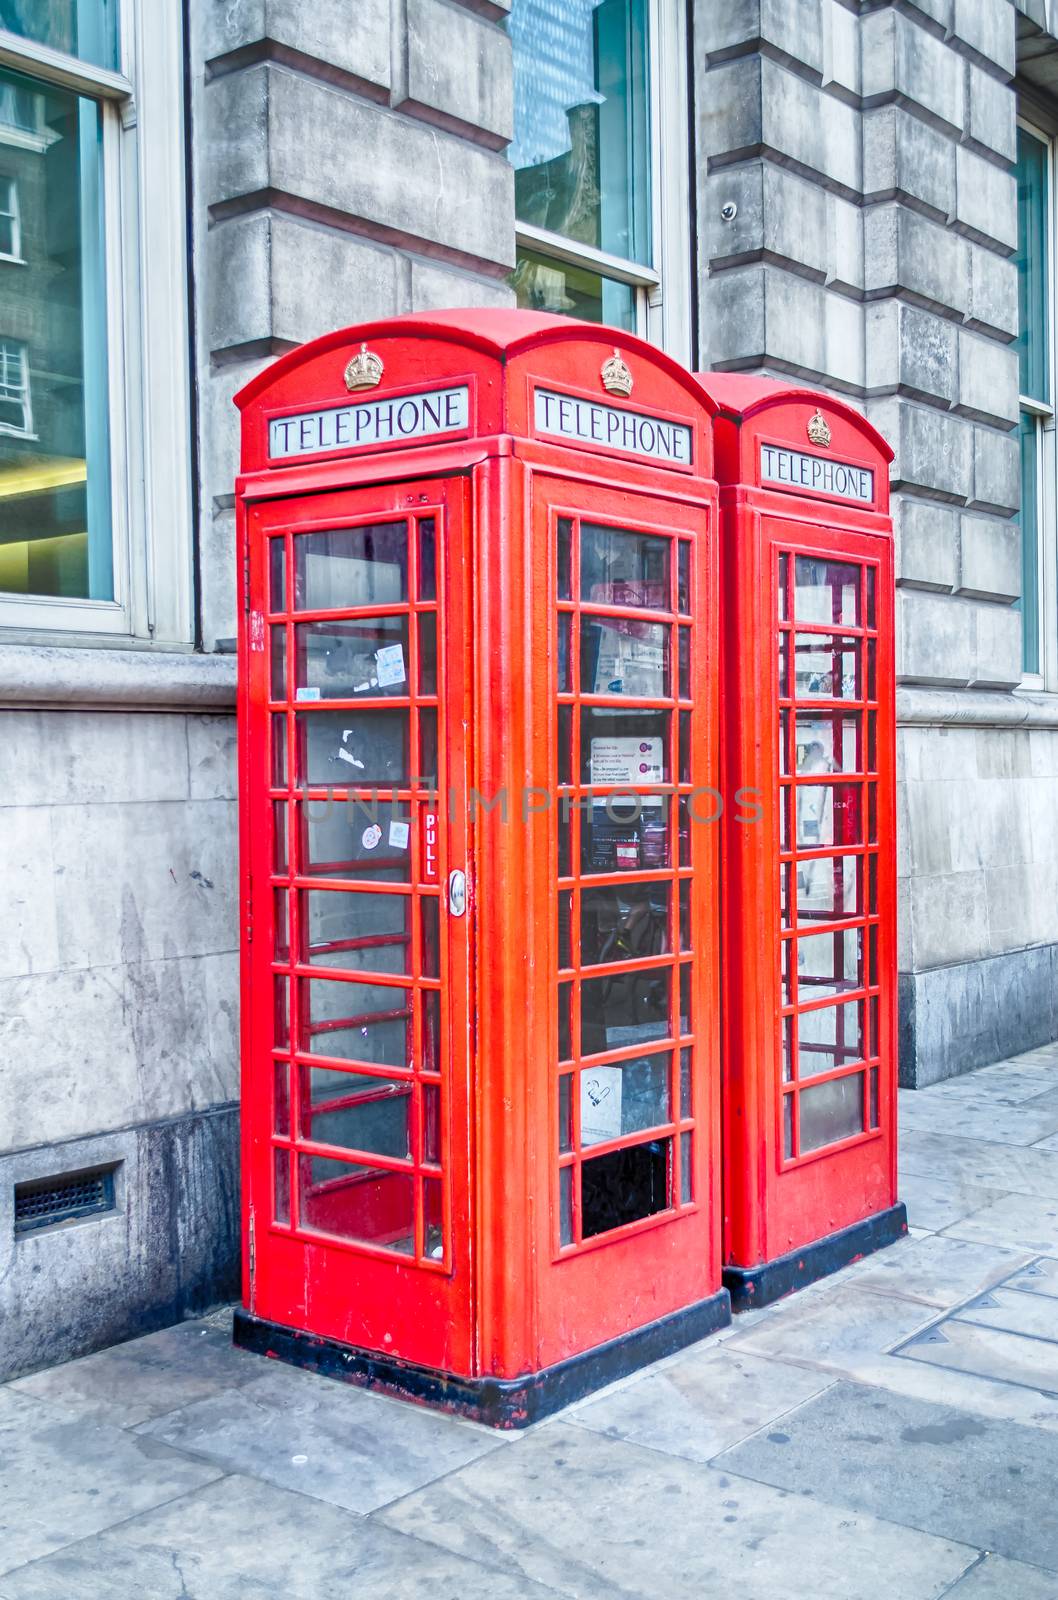 Classic British red phone booth in London by marcorubino